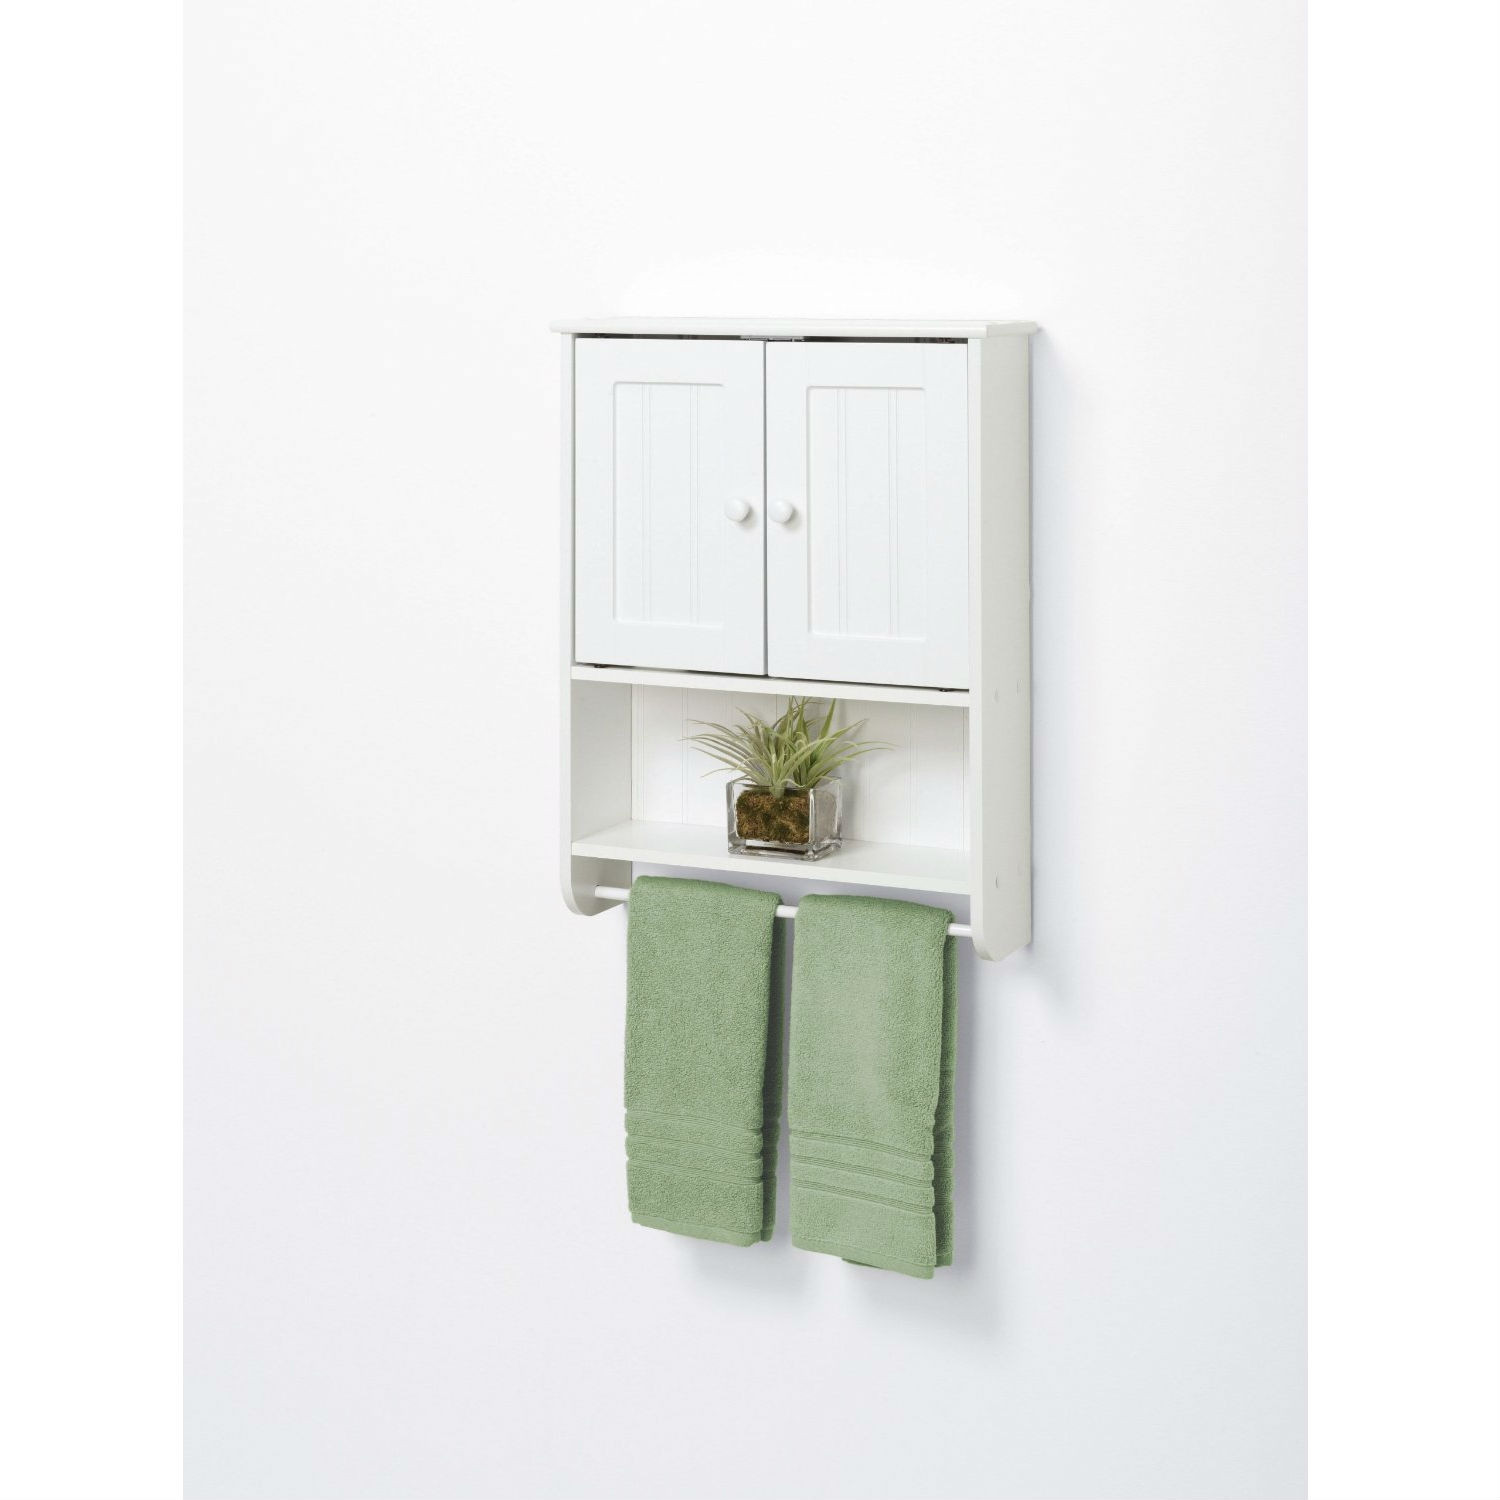 Bathroom Cabinet With Towel Rack
 Wall Mount Bathroom Cabinet with Towel Bar in White Finish